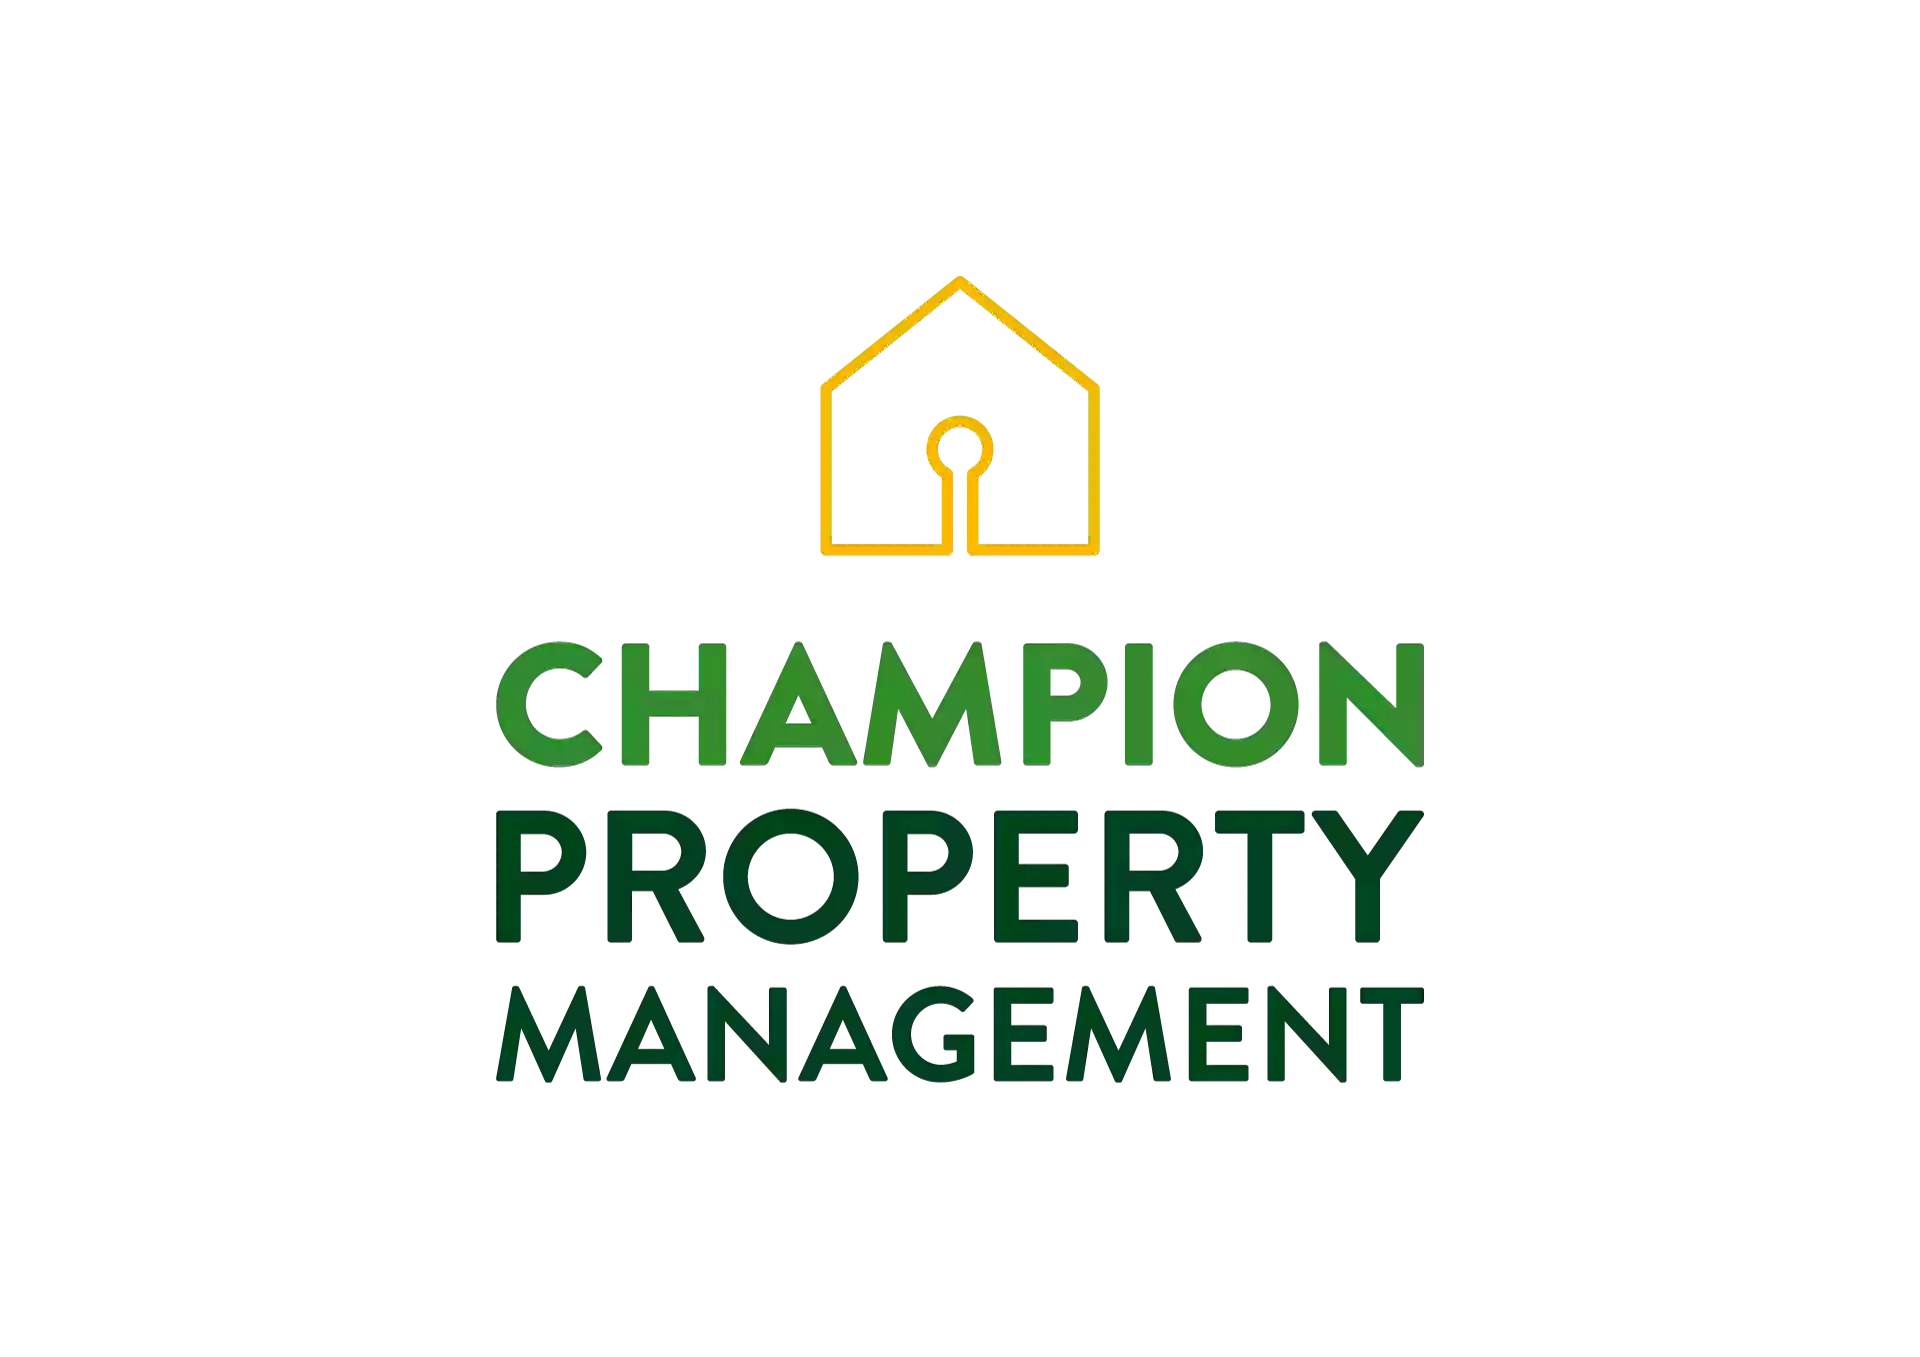 Champion Property Management